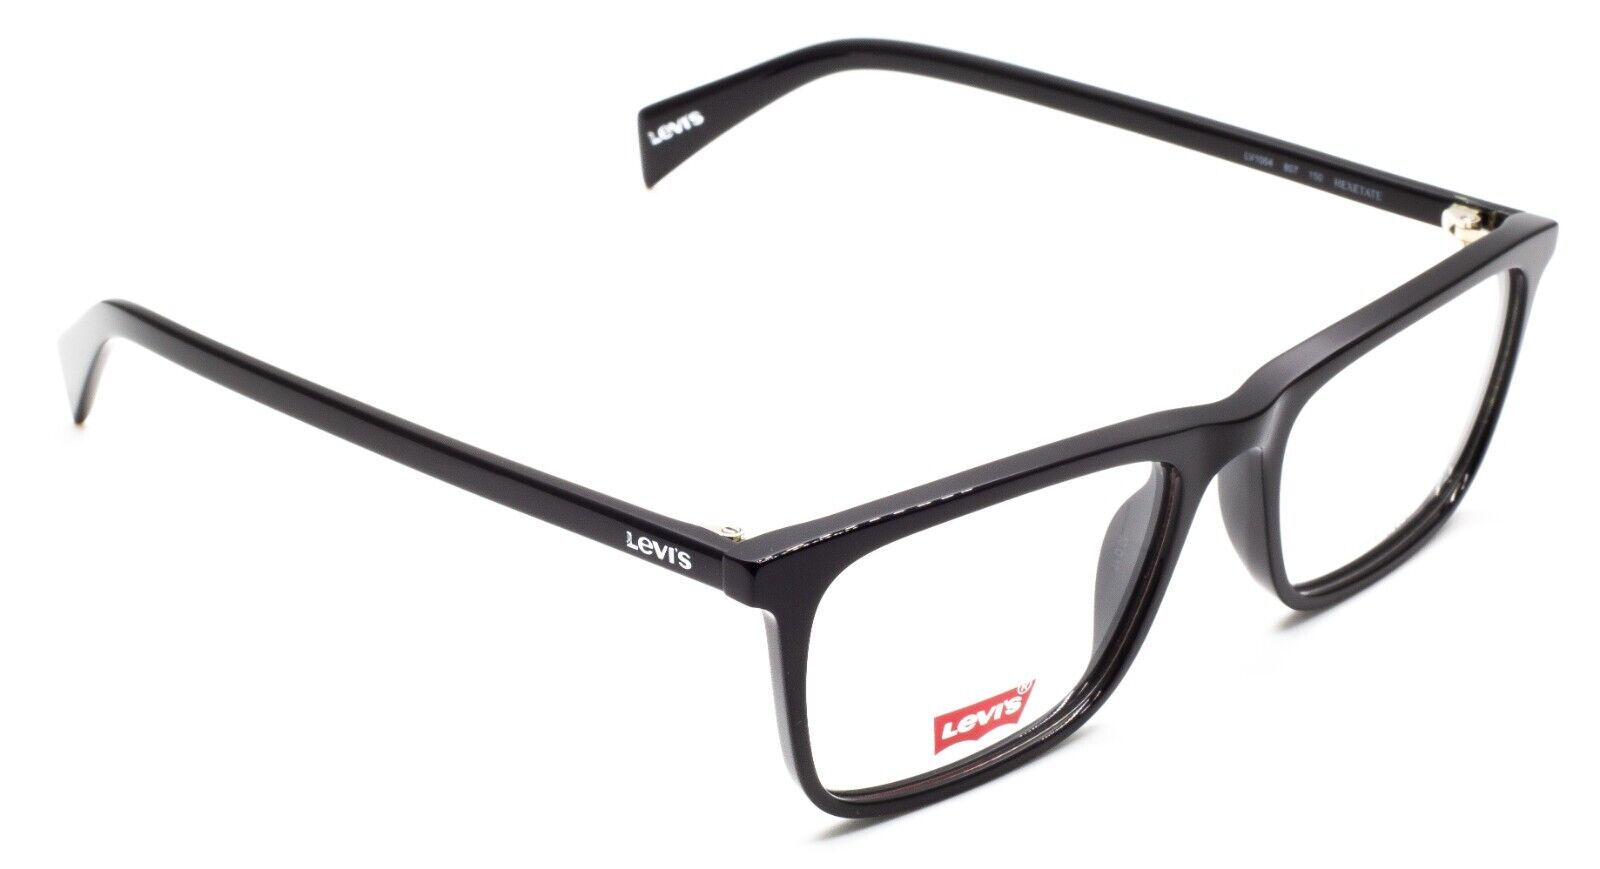  Levi's LV 1007 Oval Prescription Eyeglass Frames, Gold